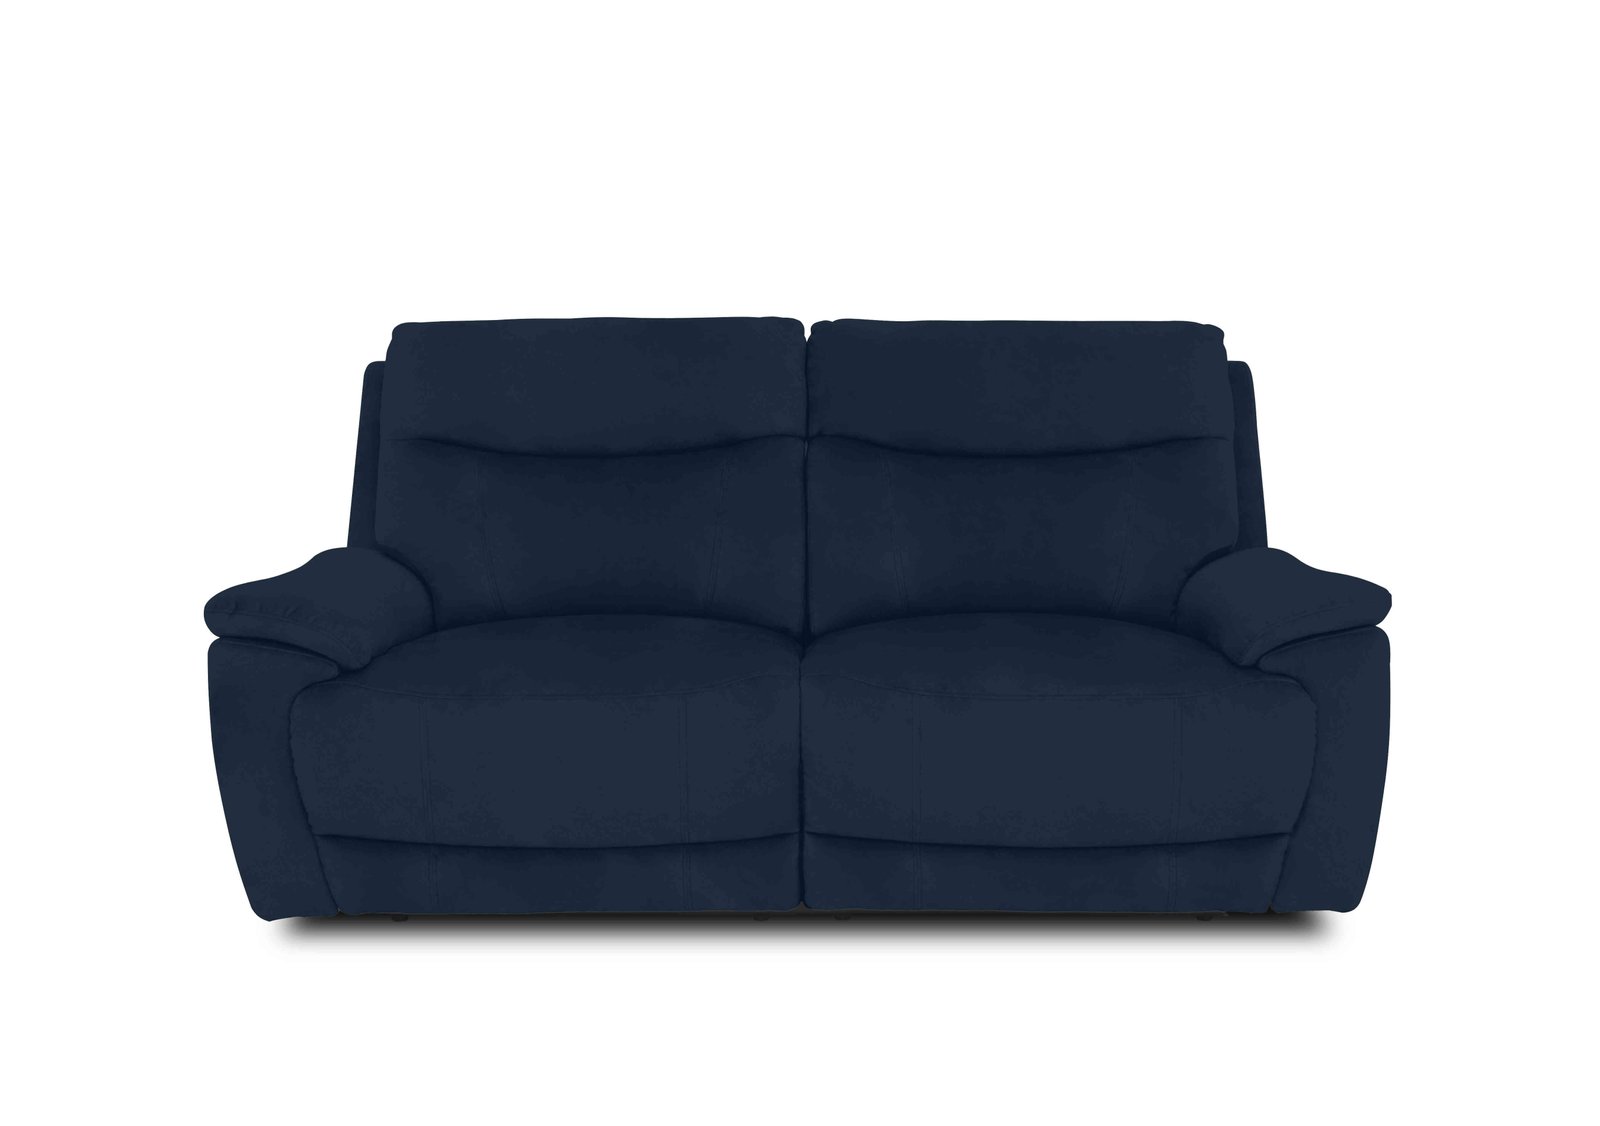 Sloane 3 Seater Fabric Sofa in 50495 Opulence Royal on Furniture Village